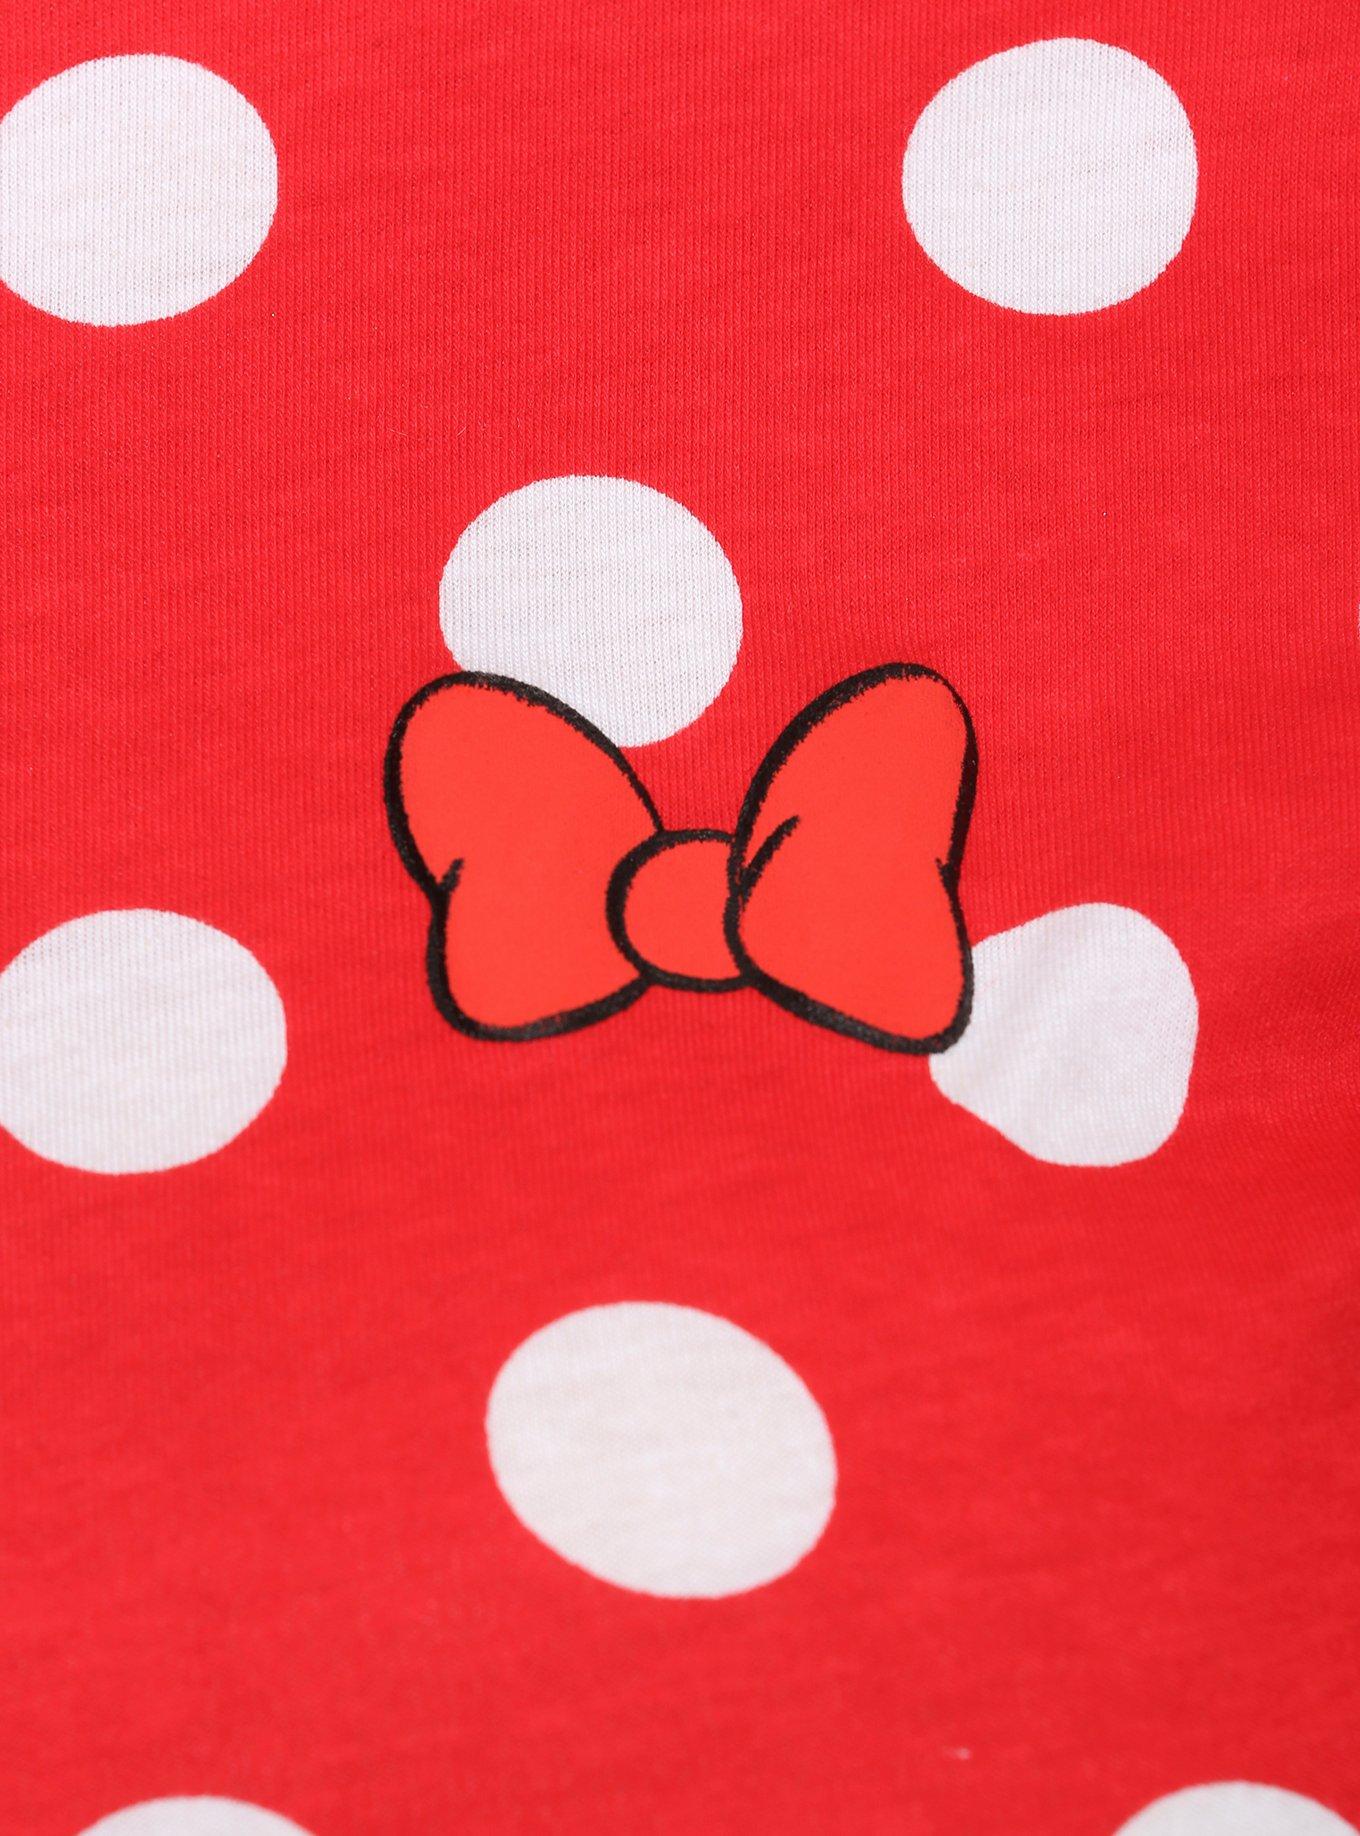 Disney Minnie Mouse Polka Dot T-Shirt Dress Plus Size, , alternate